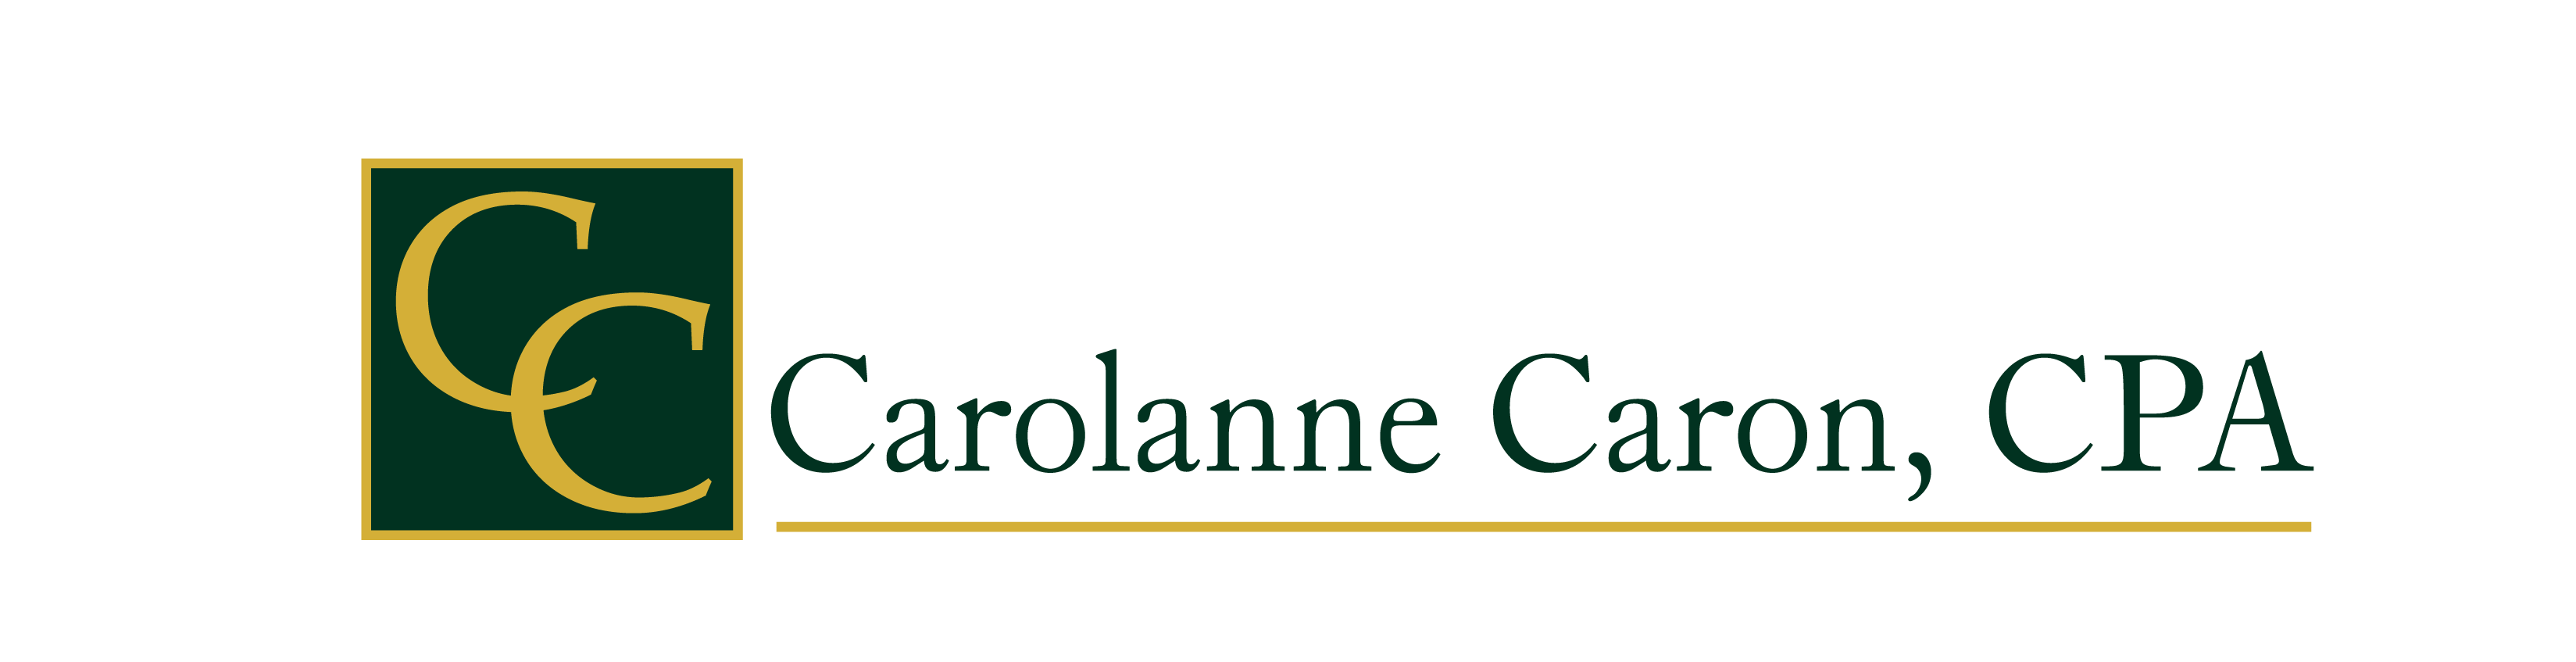 Carolanne Caron CPA Logo